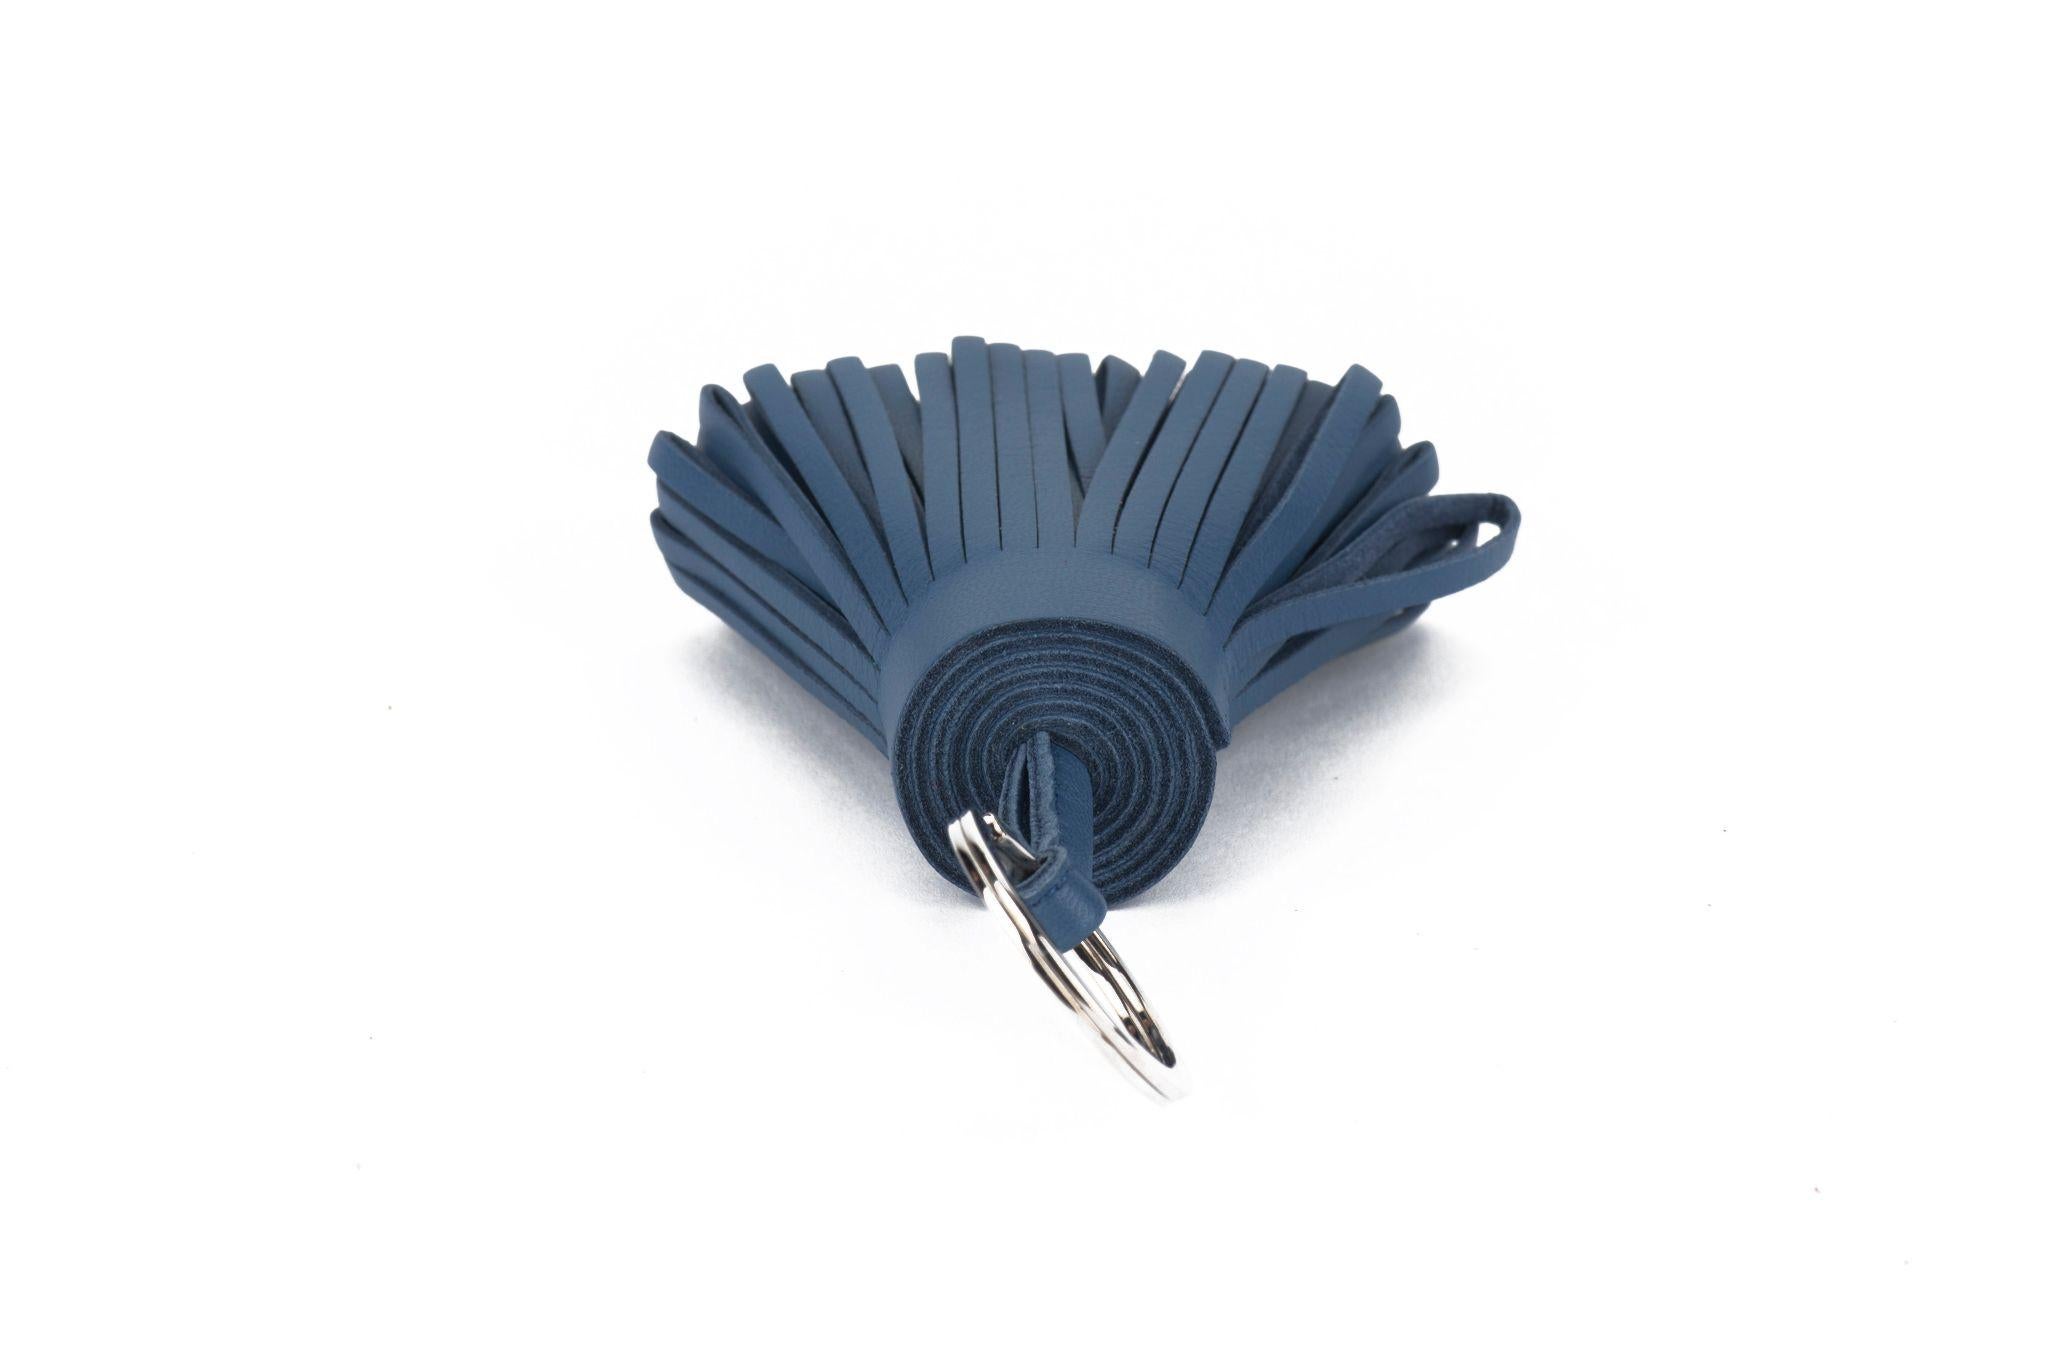 Hermès blue brighton lambskin leather Carmen tassel keychain. Brand new with original box in unused condition.